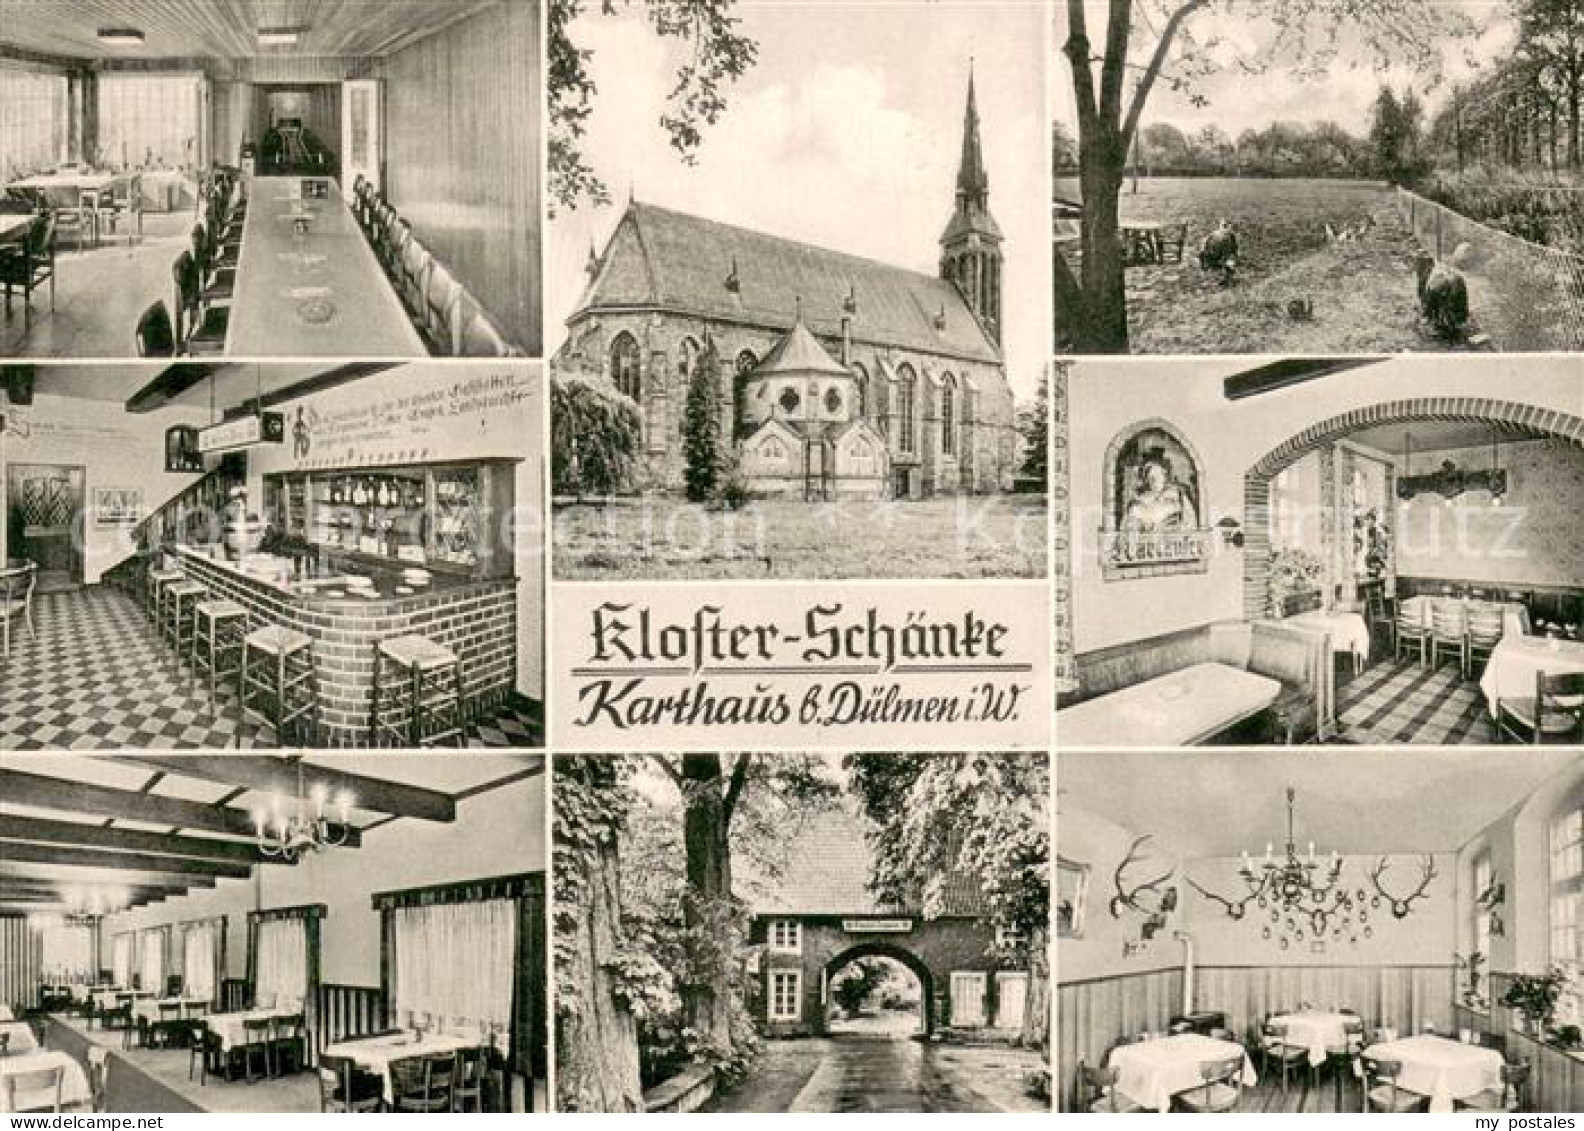 73695179 Duelmen Kloster Schaenke Karthaus Gastraeume Bar  Duelmen - Duelmen